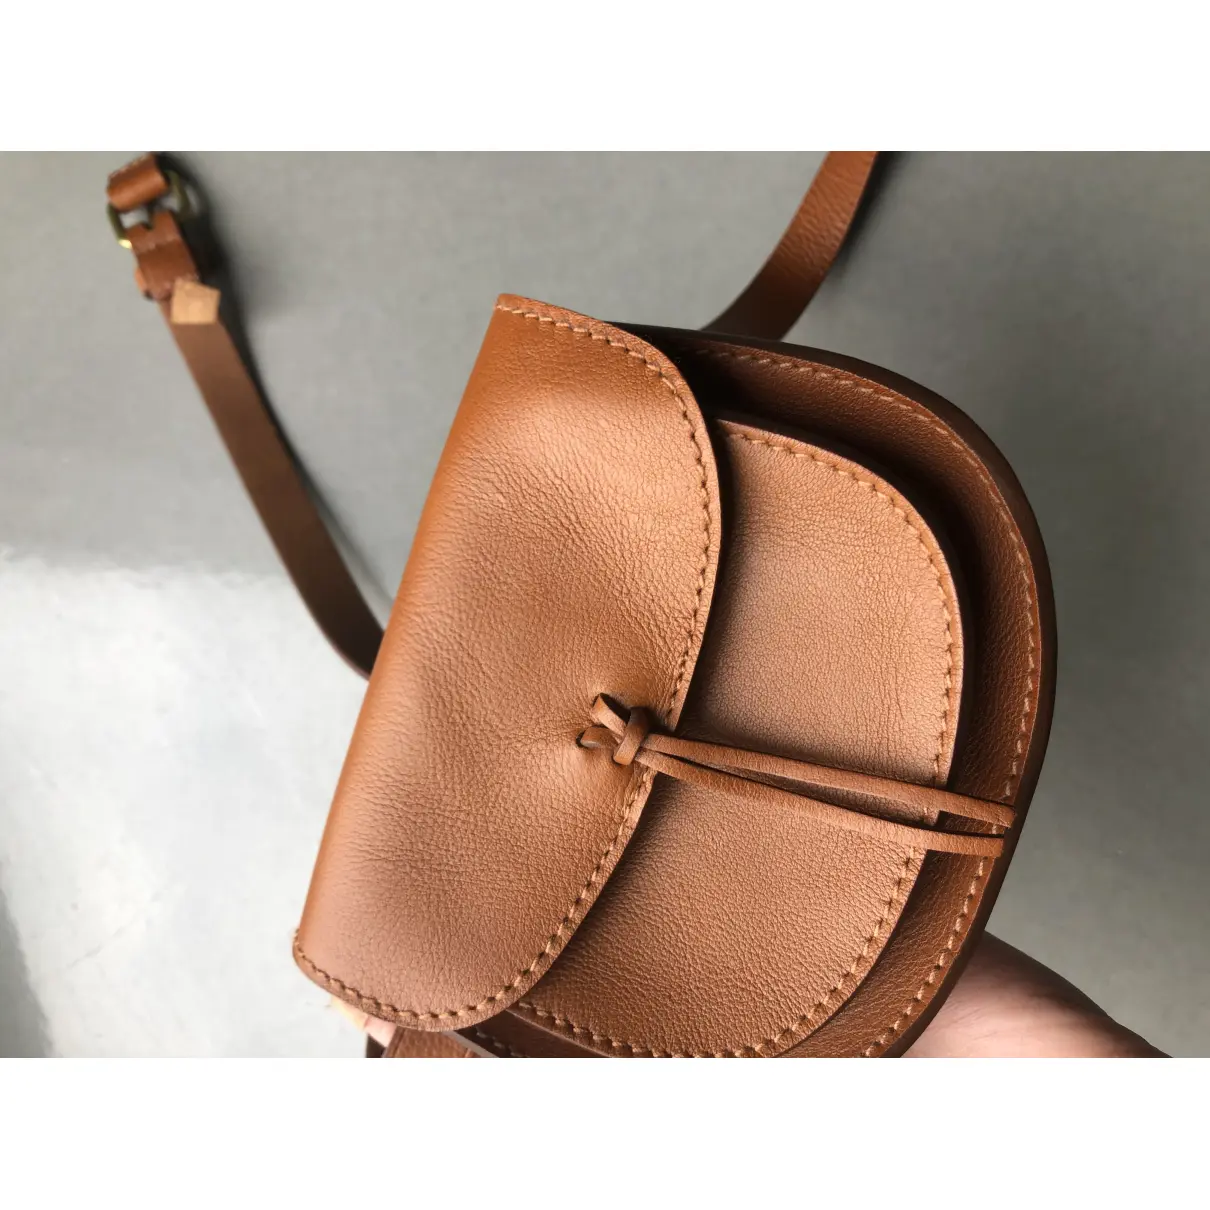 Leather handbag Madewell